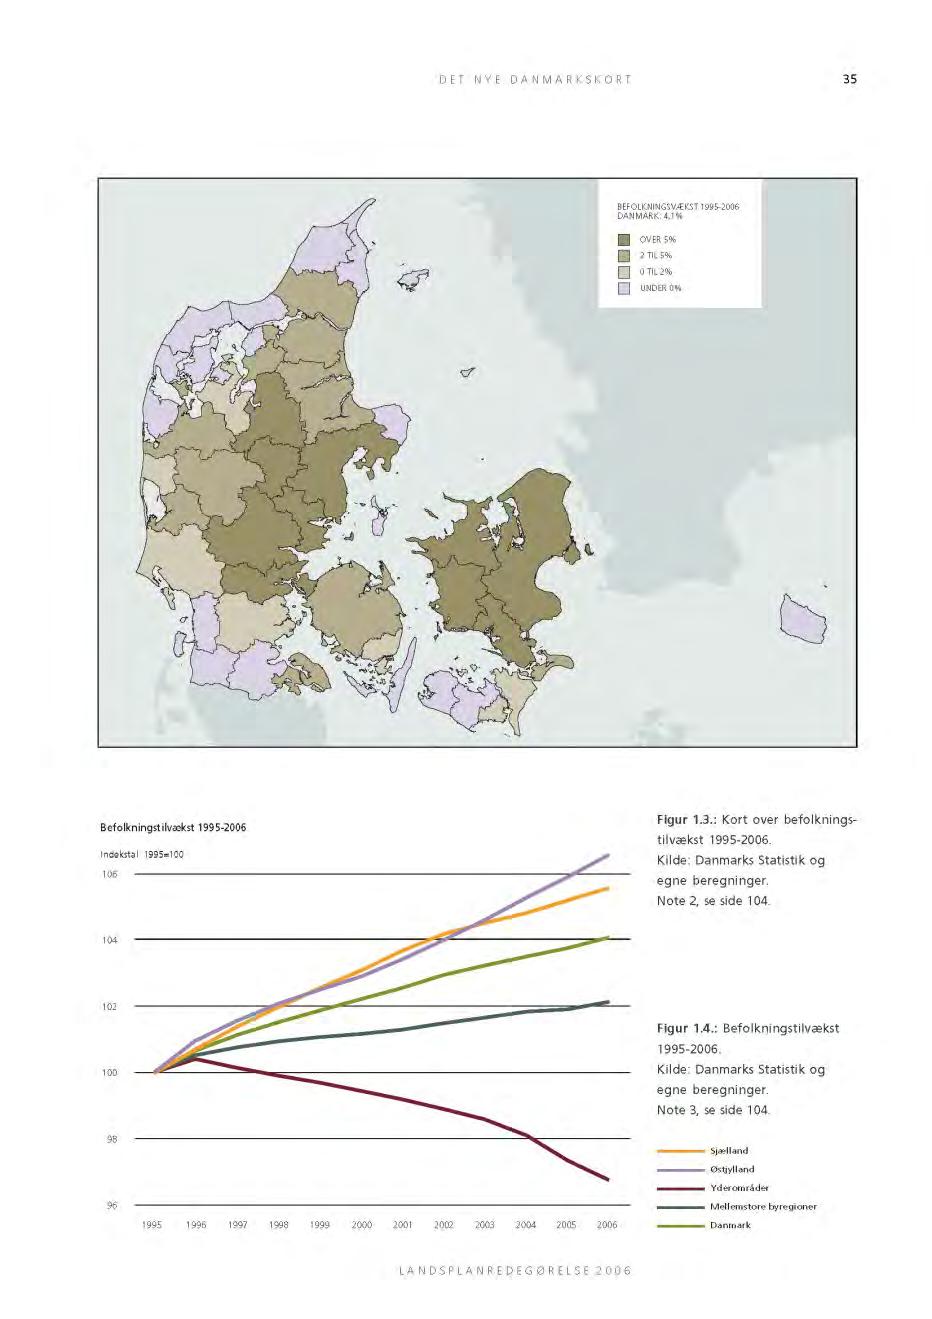 Unequal spatial development in DK